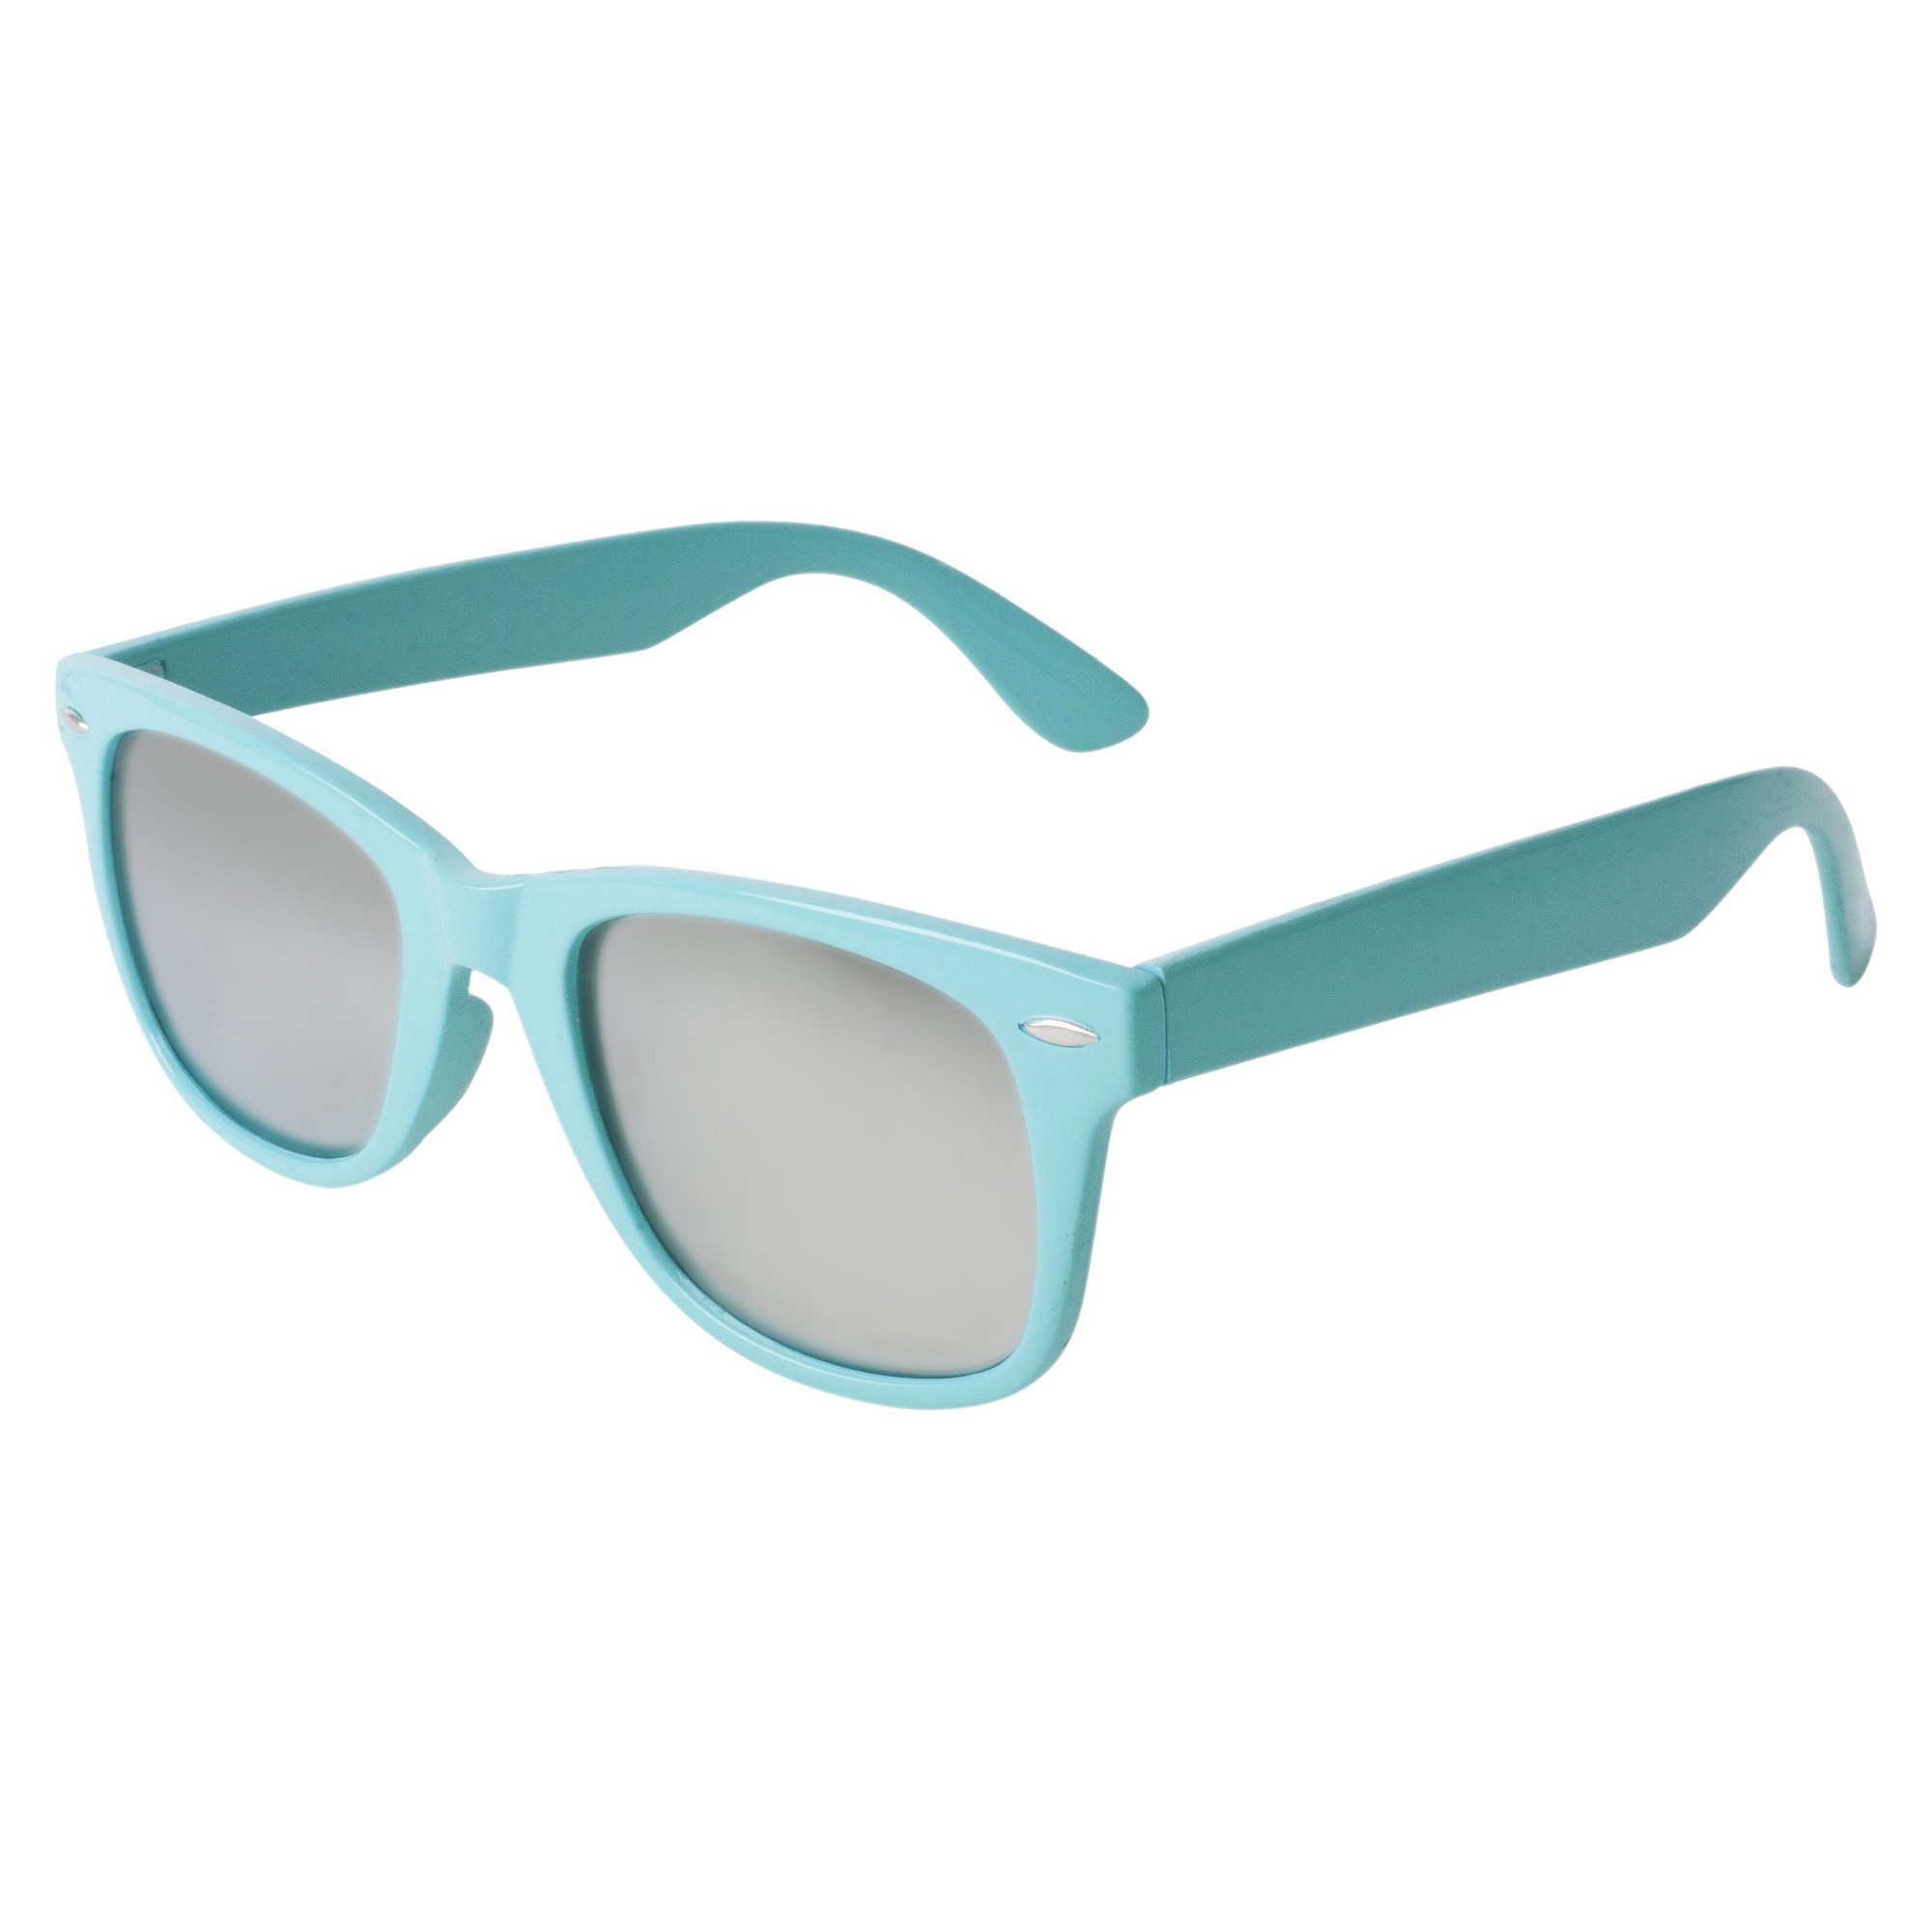 Women's Surf Sunglasses - Wild Fable Blue, Women's, Size: Small, Blue/Blue